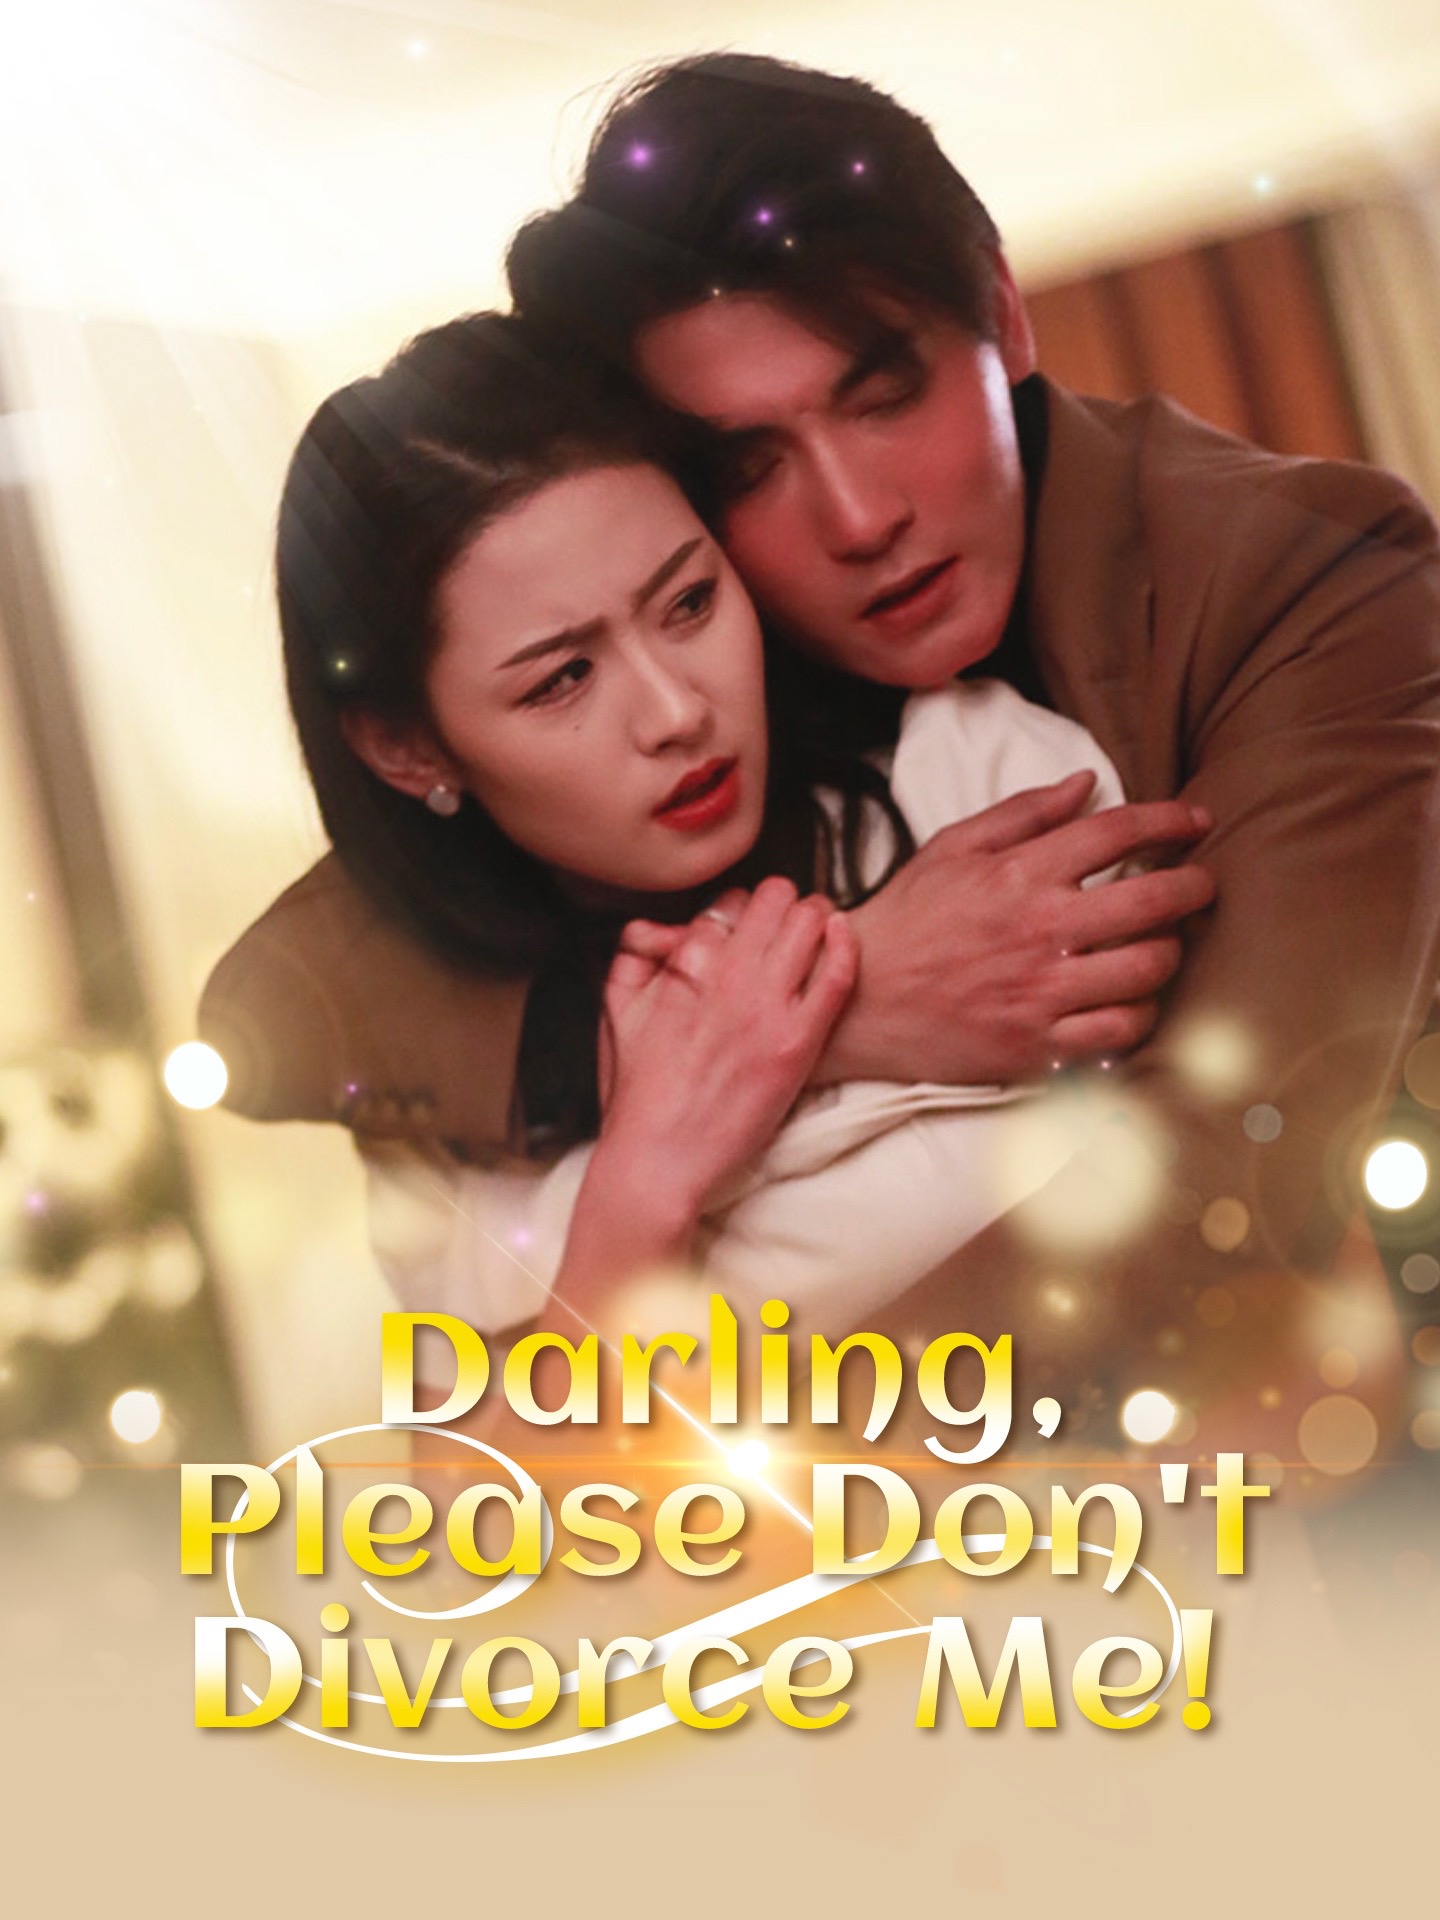 Darling, Please Don’t Divorce Me!